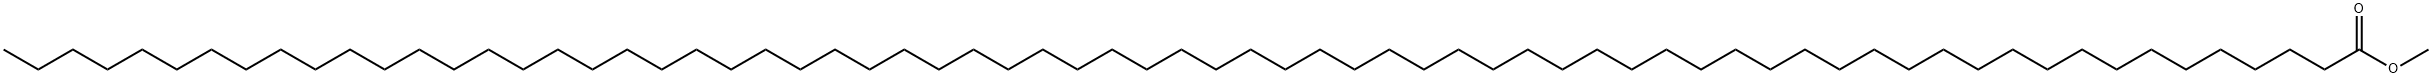 Nonahexacontanoic acid methyl ester Struktur